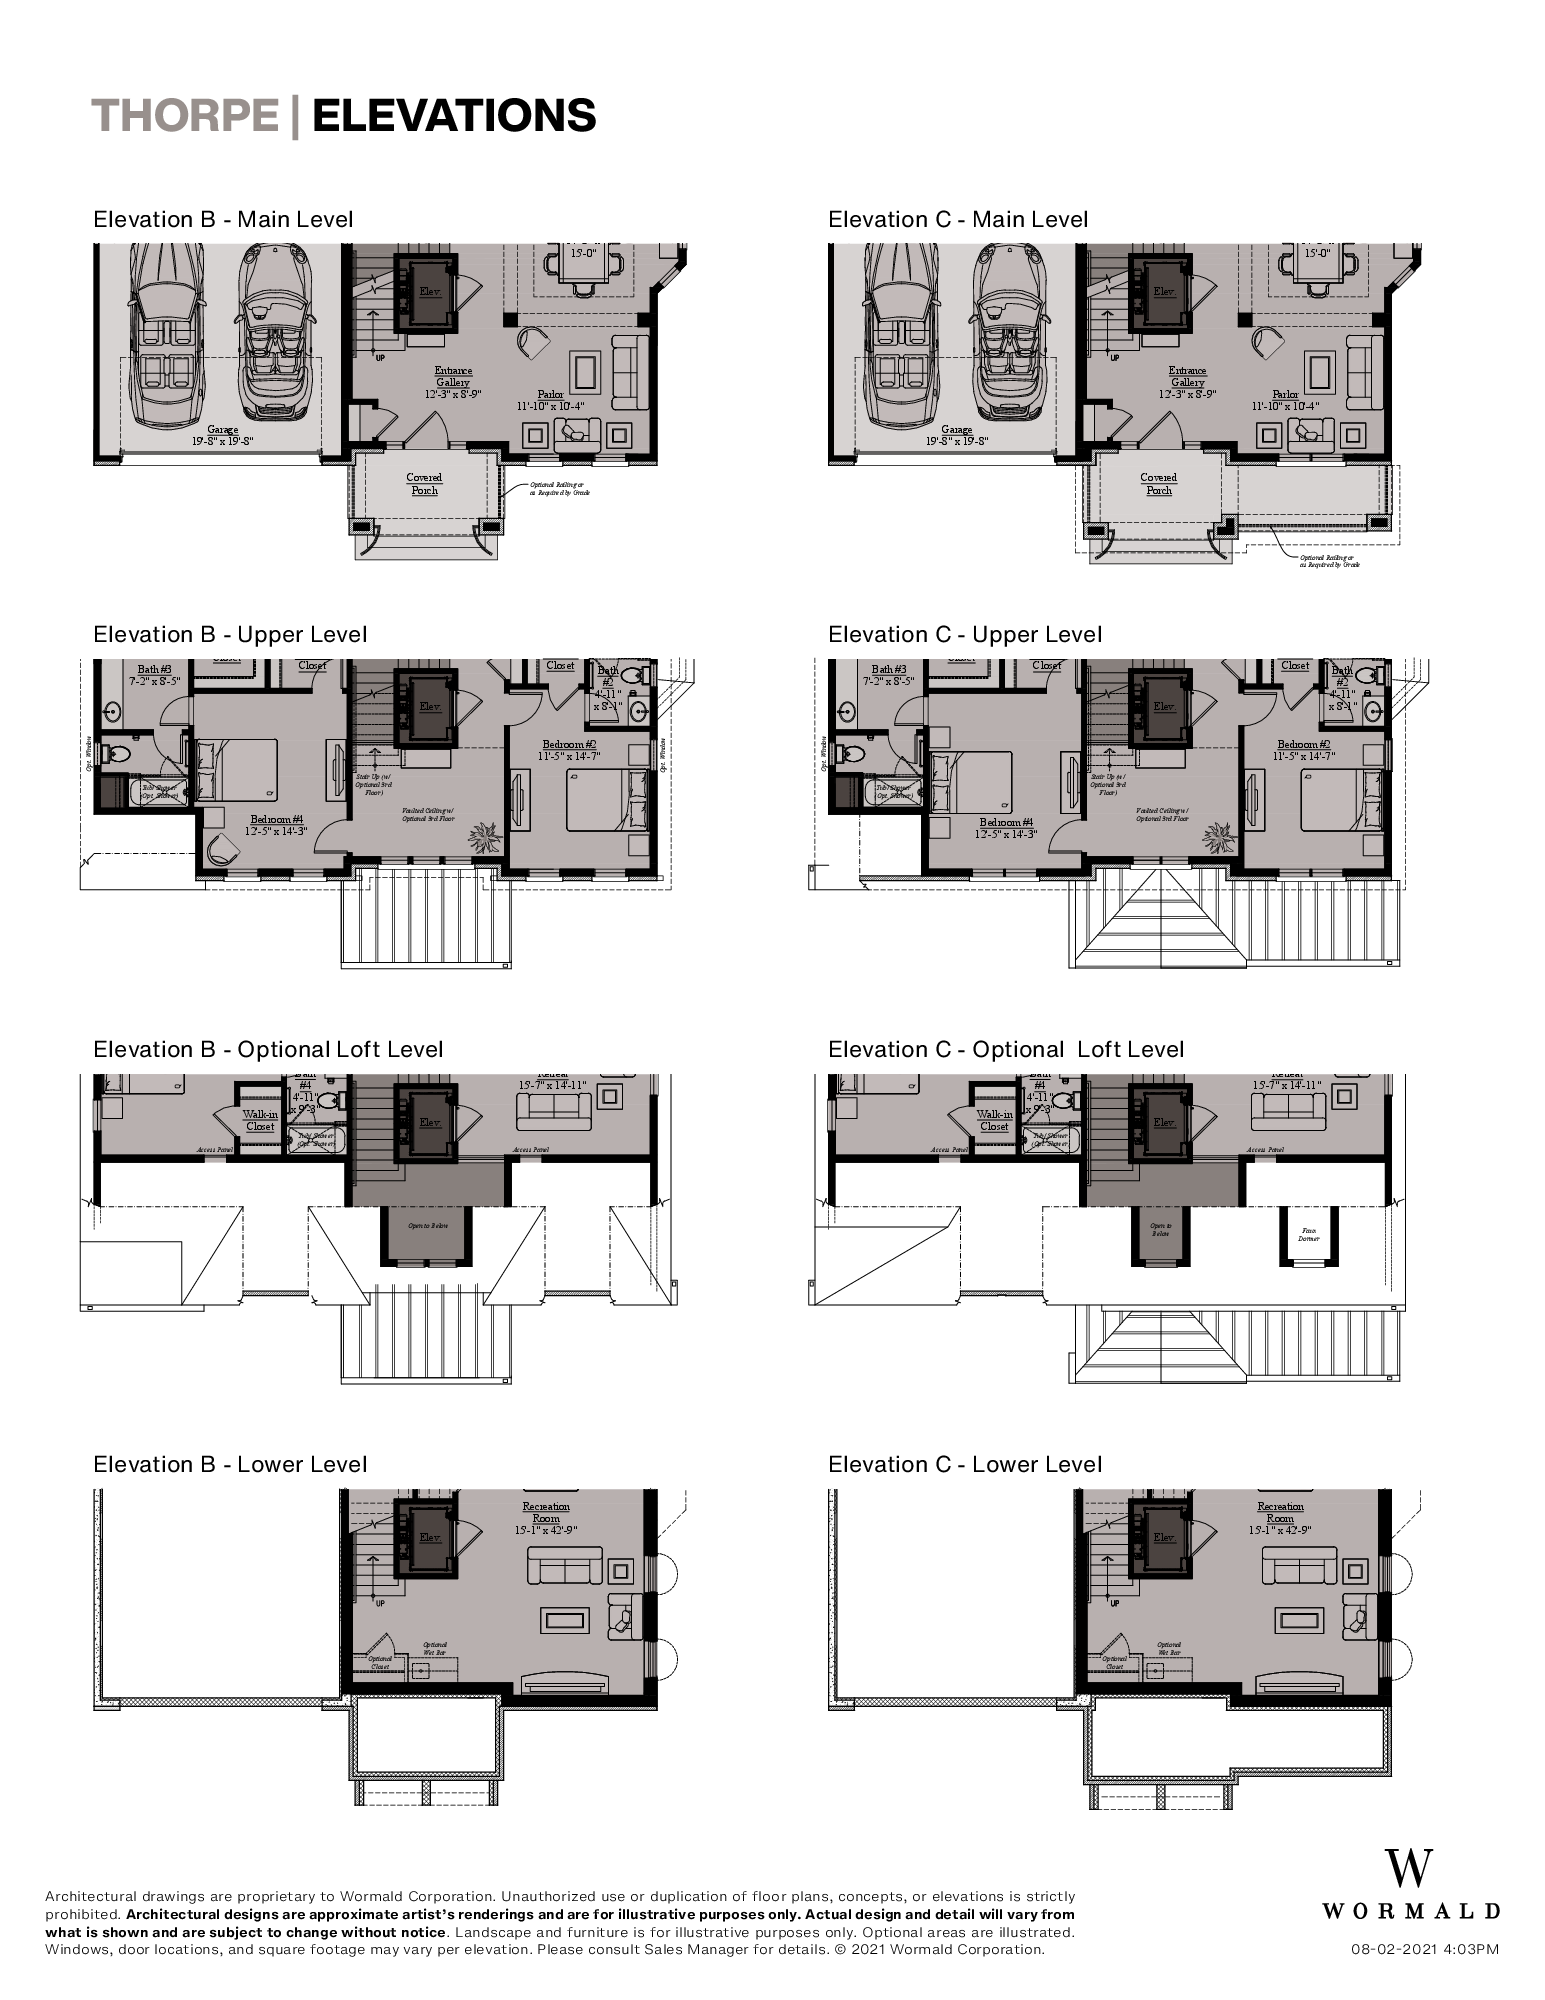 The Thorpe floor plan 4